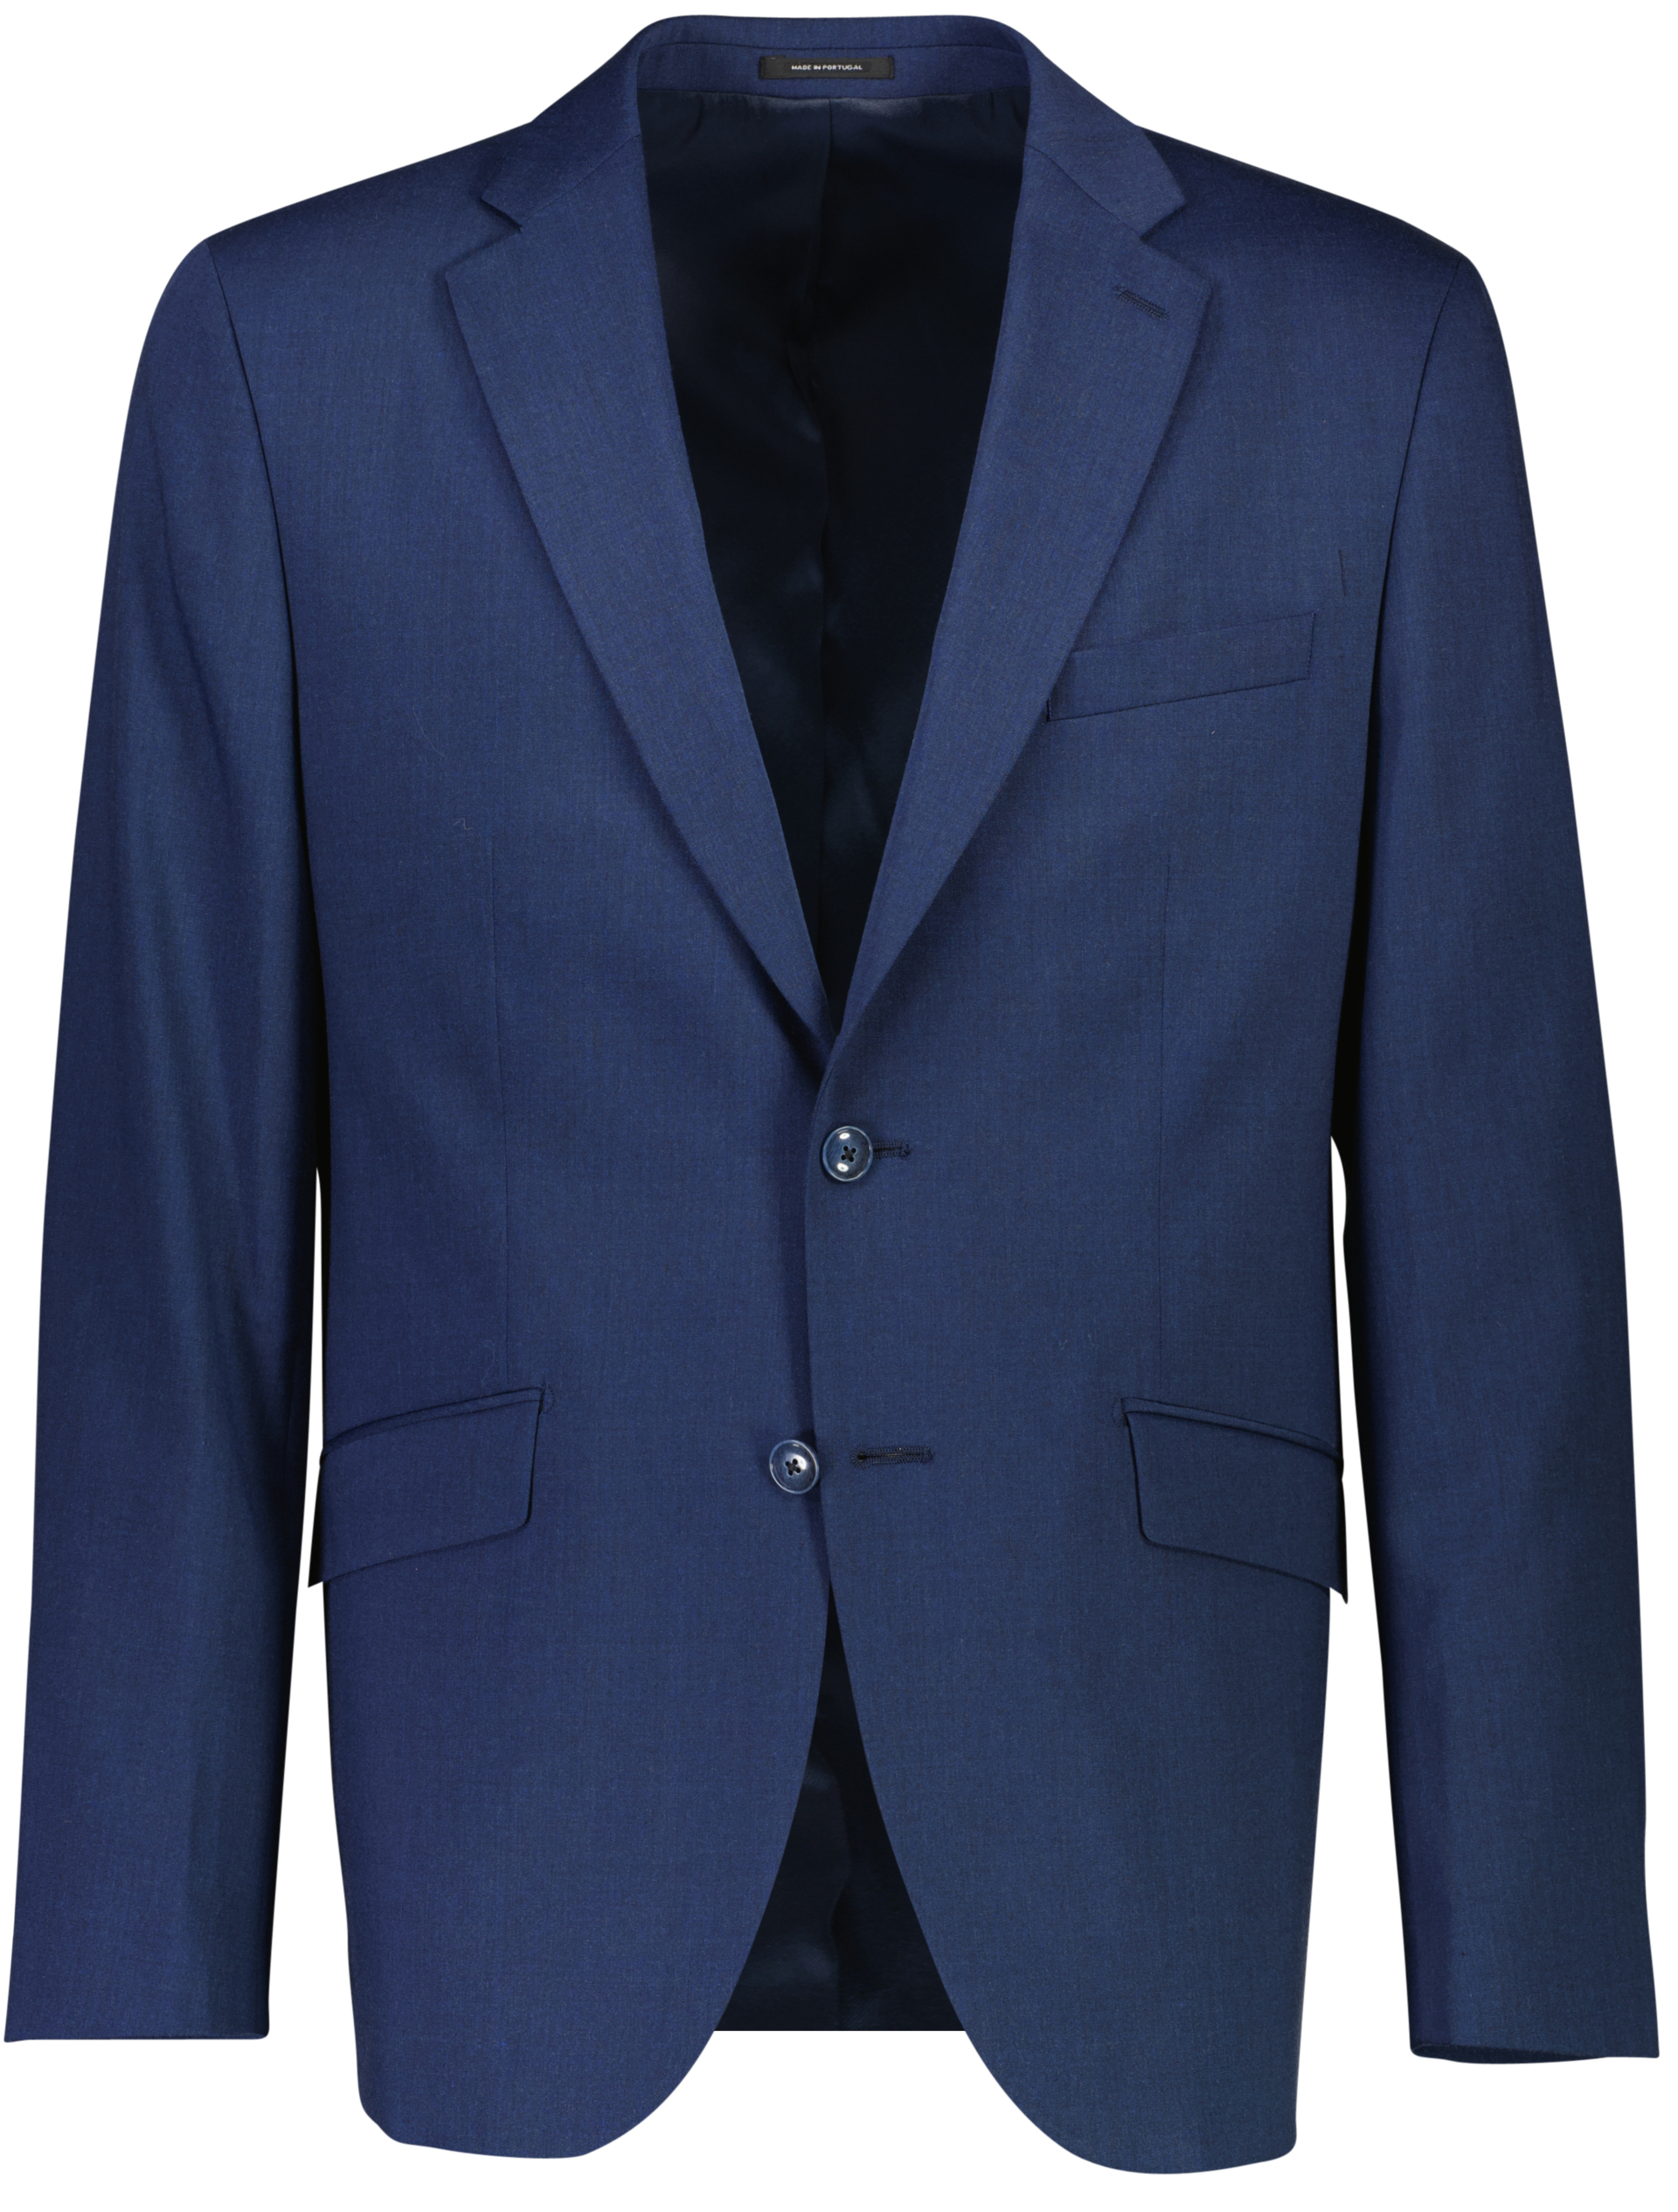 Lindbergh Suit jacket blue / mid navy mel